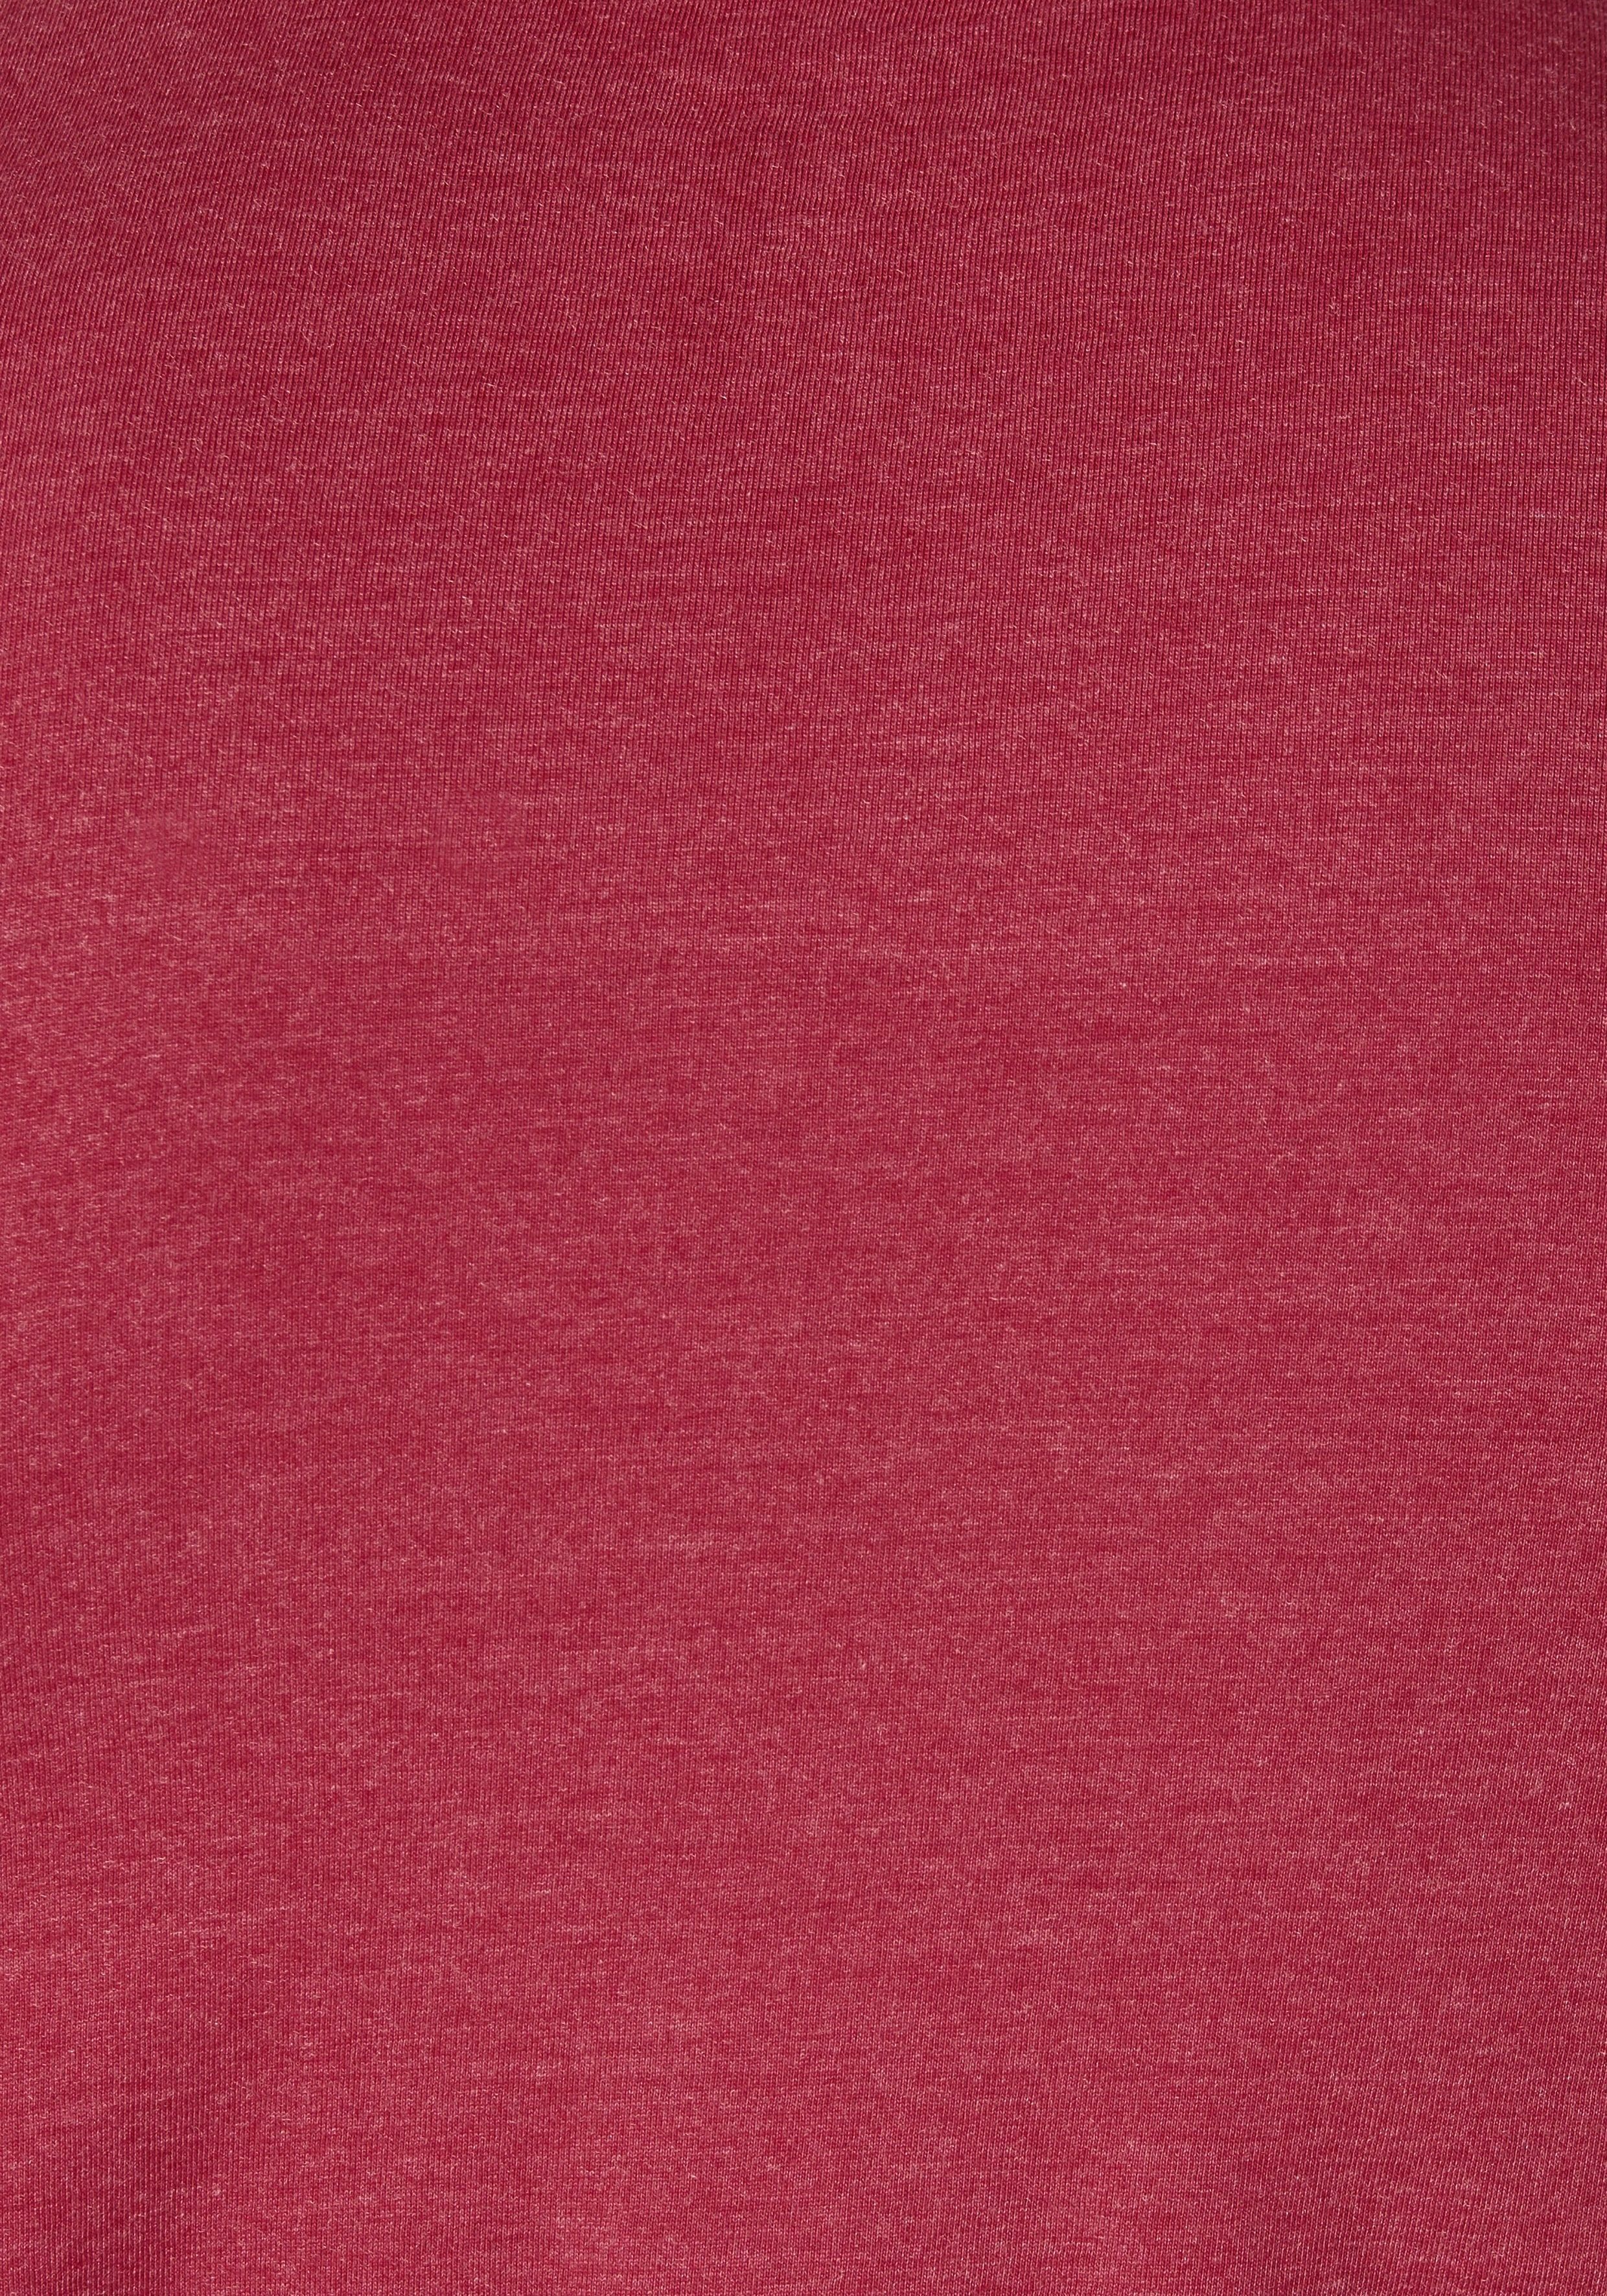 mit rot-meliert Print in T-Shirt Arizona Optik Vintage